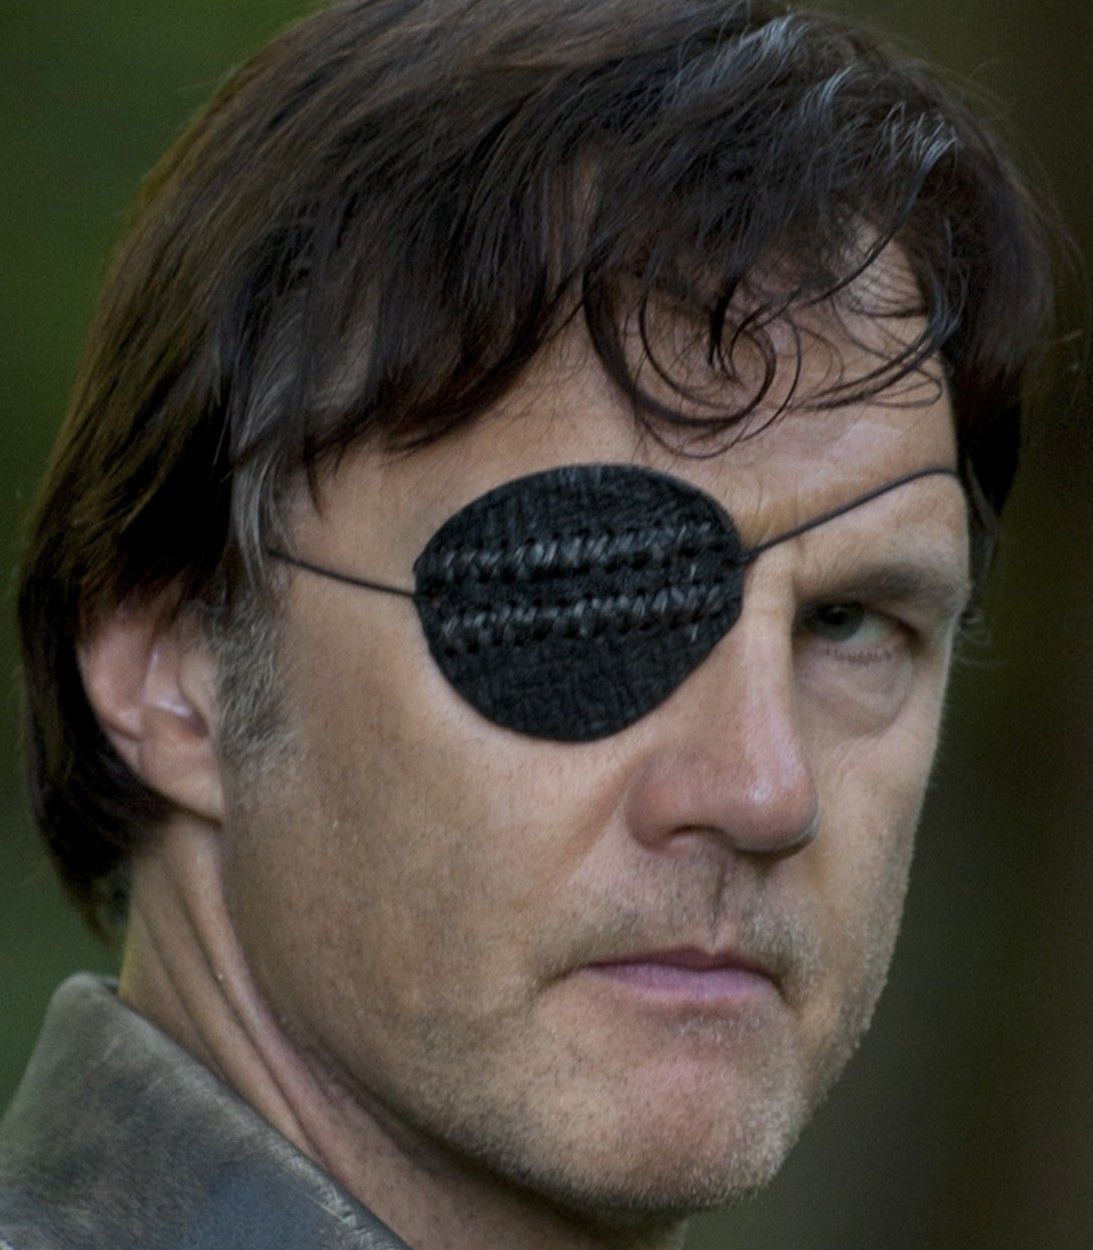 David Morrissey as Governor in Walking Dead vertical